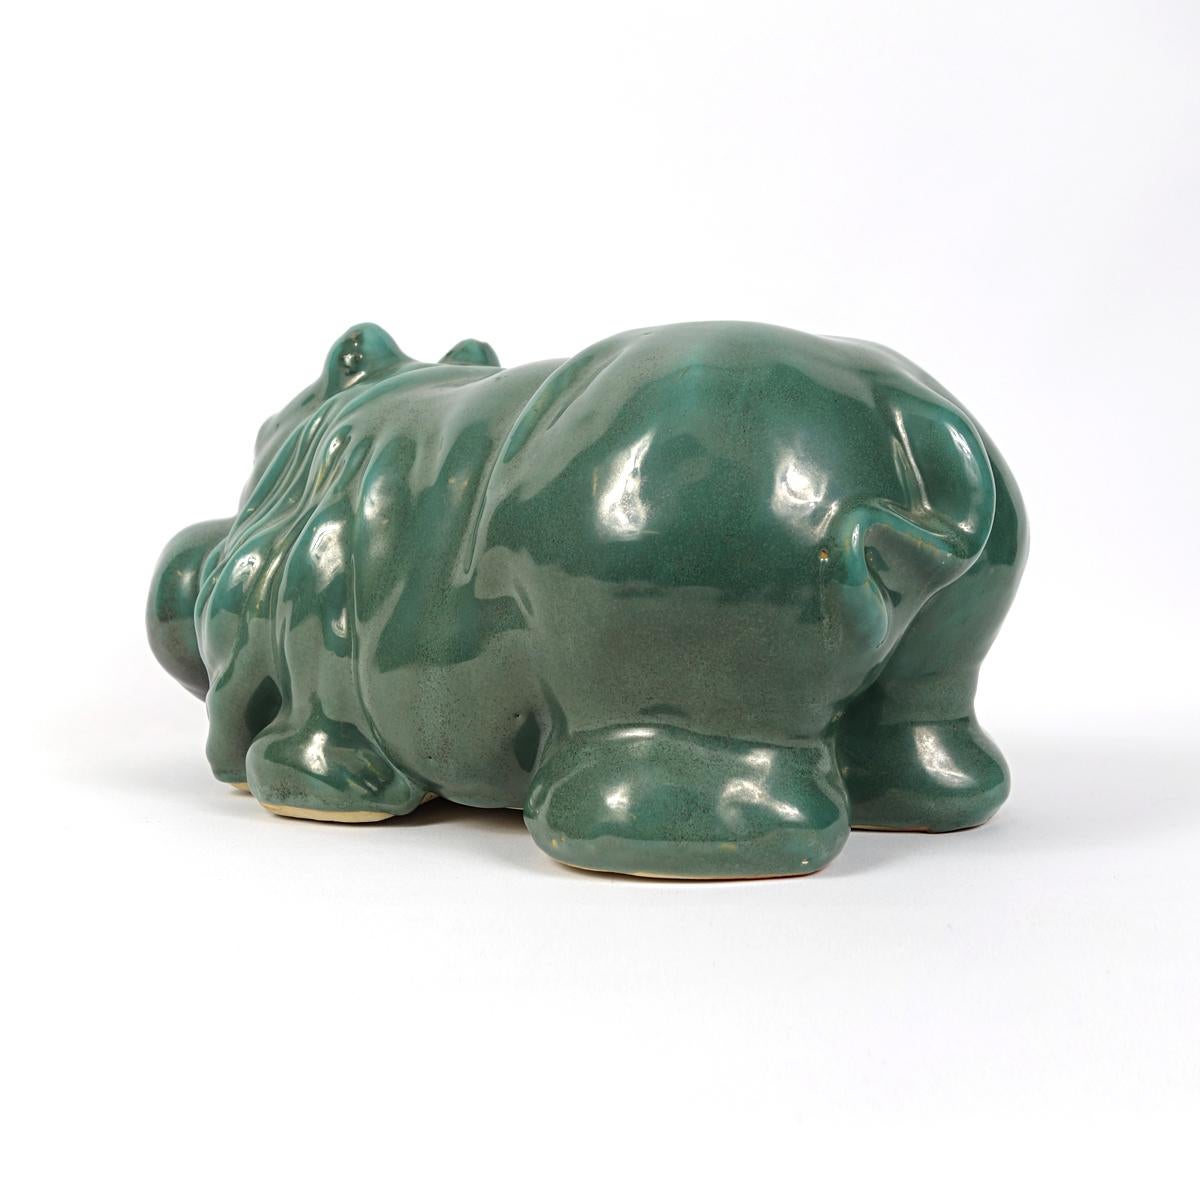 Néerlandais Grande statue en cramique verte joyeuse reprsentant un Hippopotamus en vente